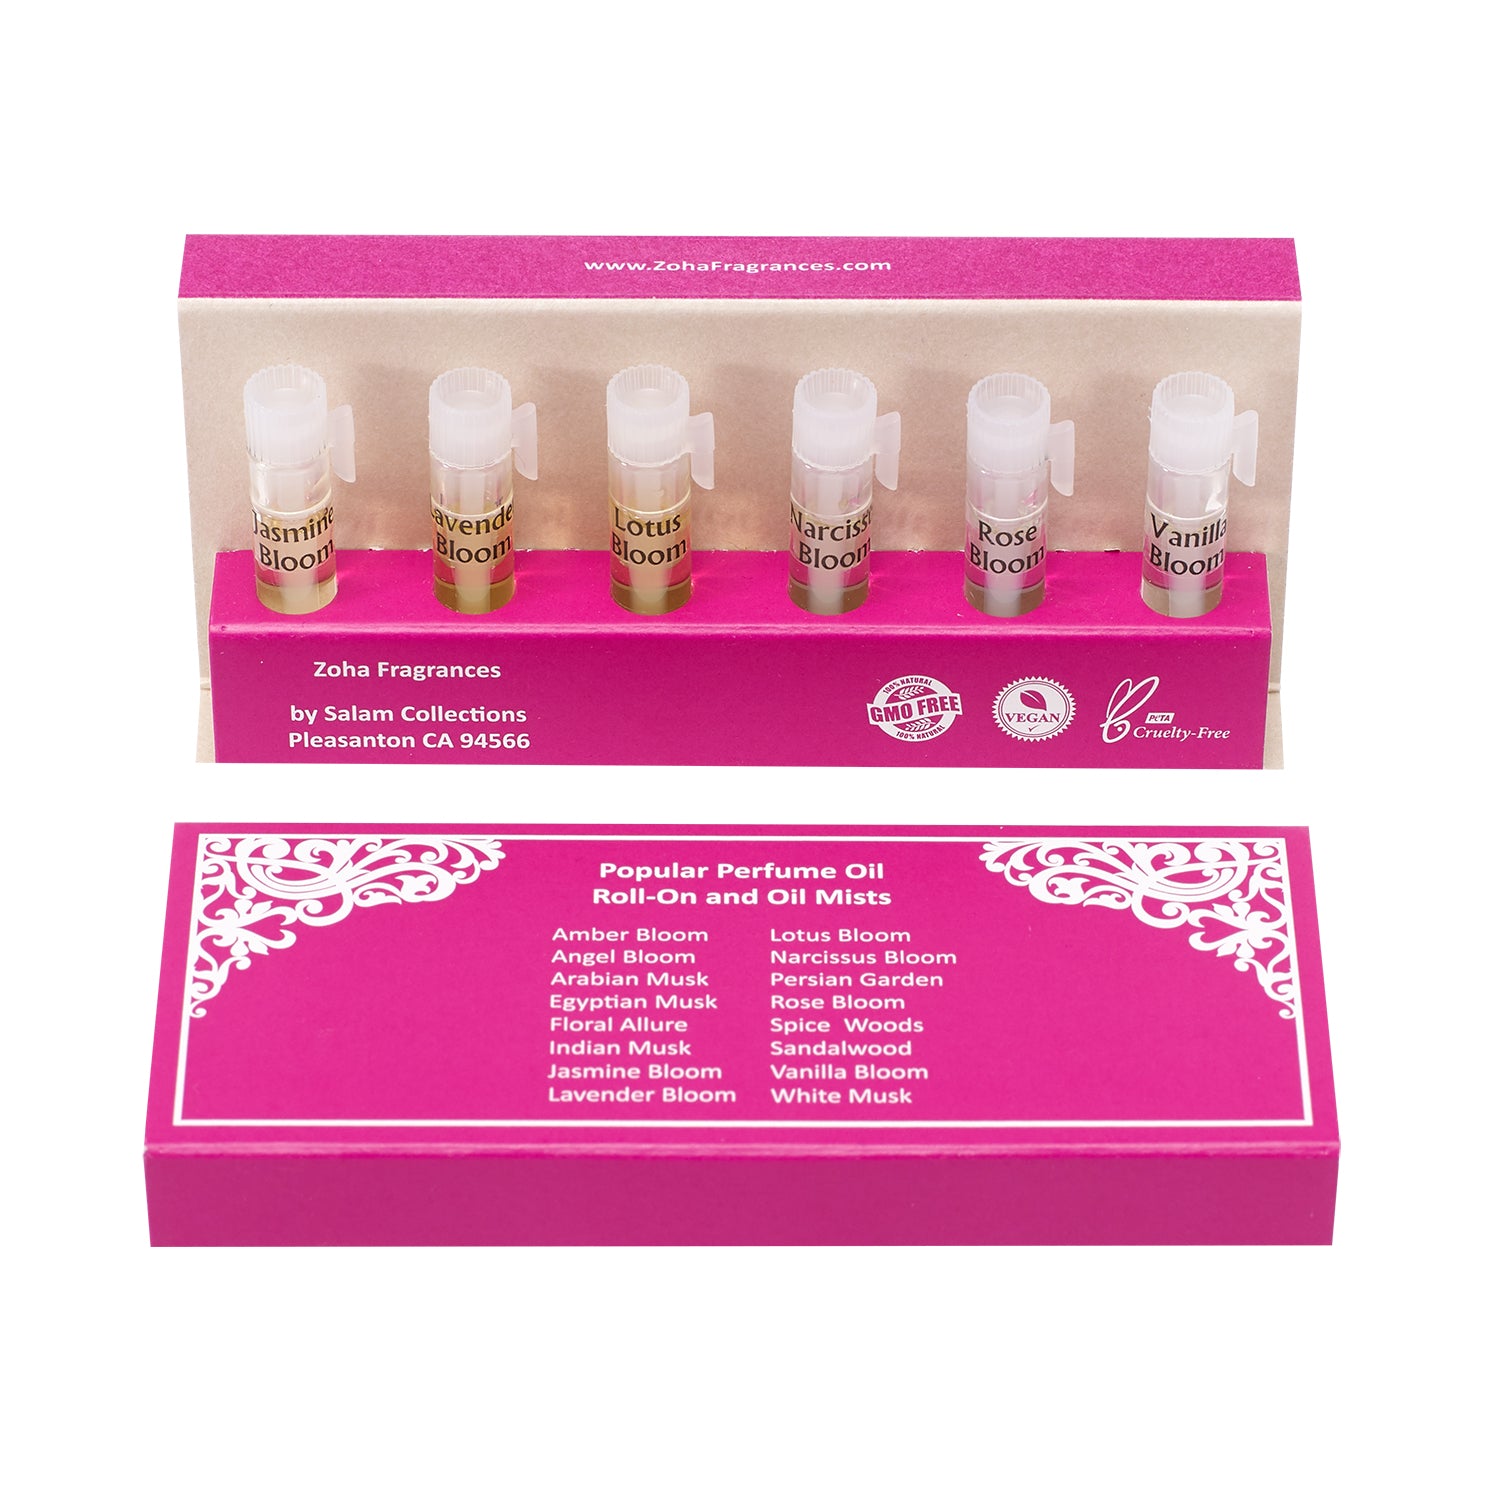 Perfume Oil Sampler - 6 Perfume Samples in 1ml Vials (Half Filled) by Zoha Fragrances